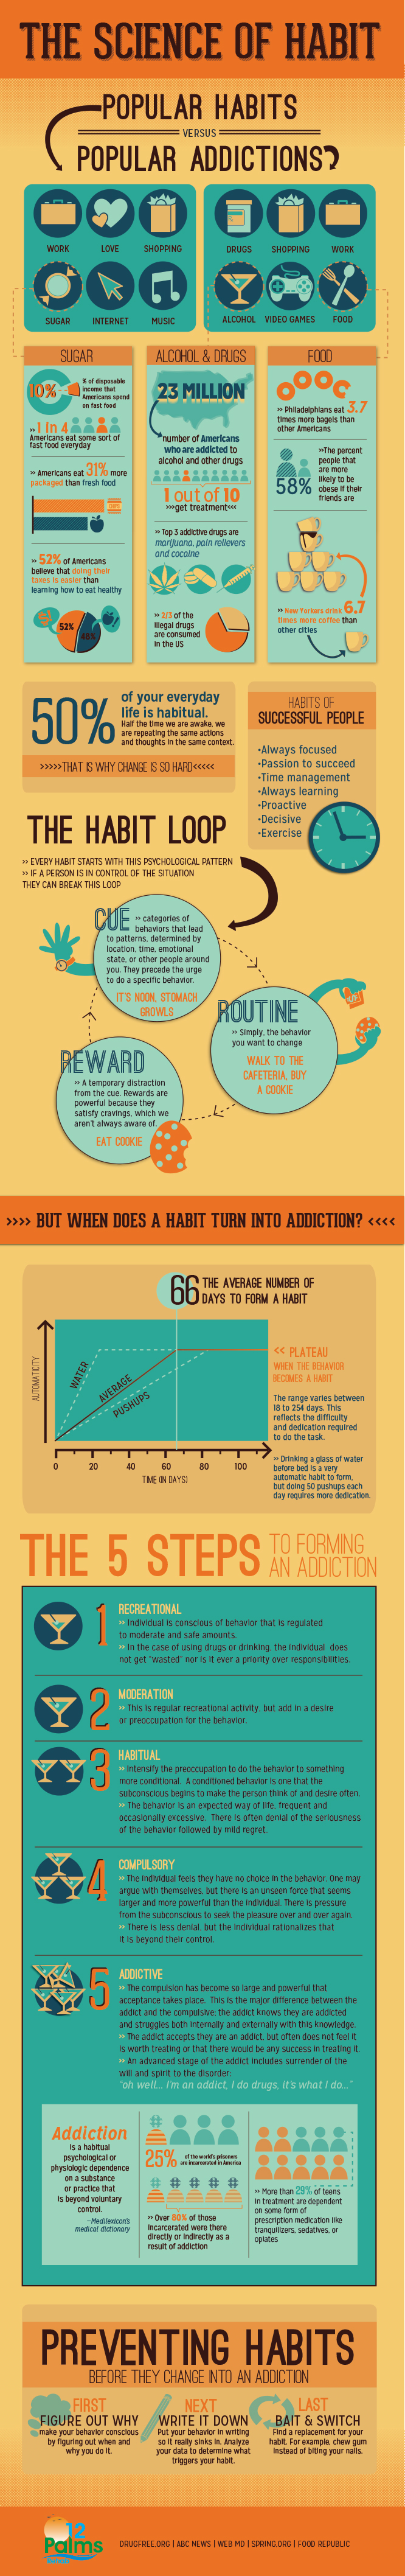 The Science of Habit: Popular Habits vs. Popular Addictions